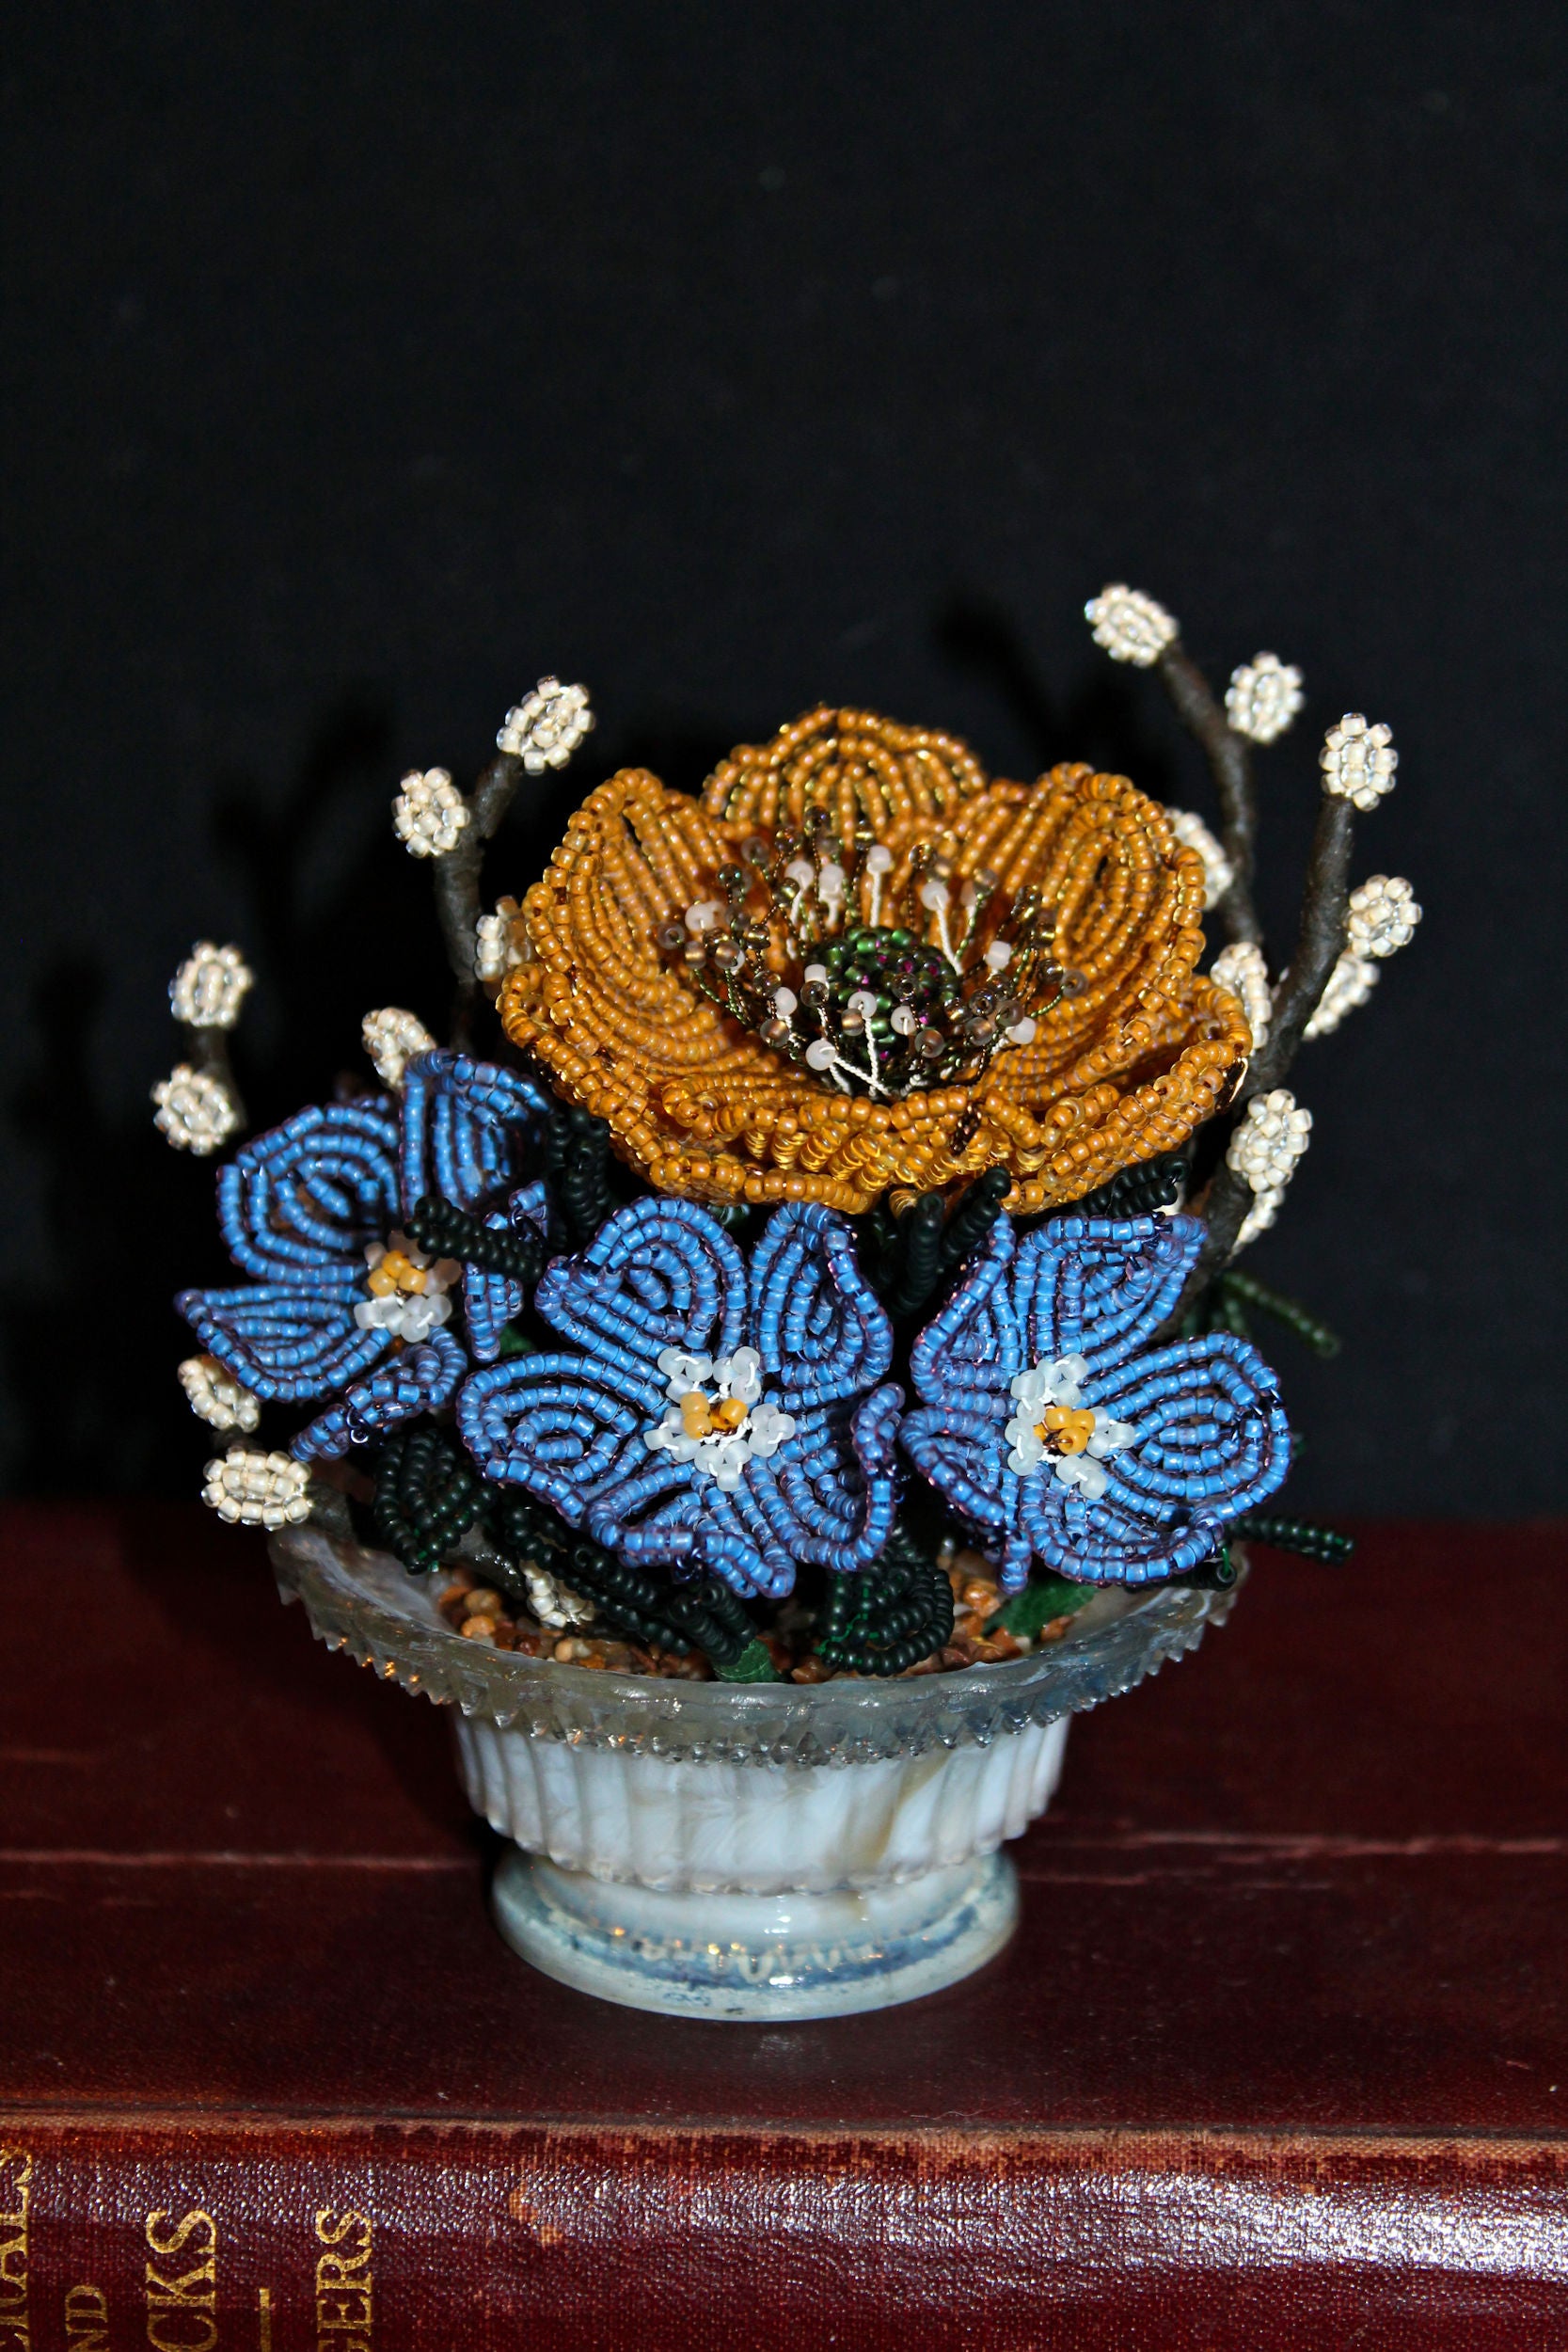 Golden Poppy and Blue Periwinkle Mini Arrangement - SOLD